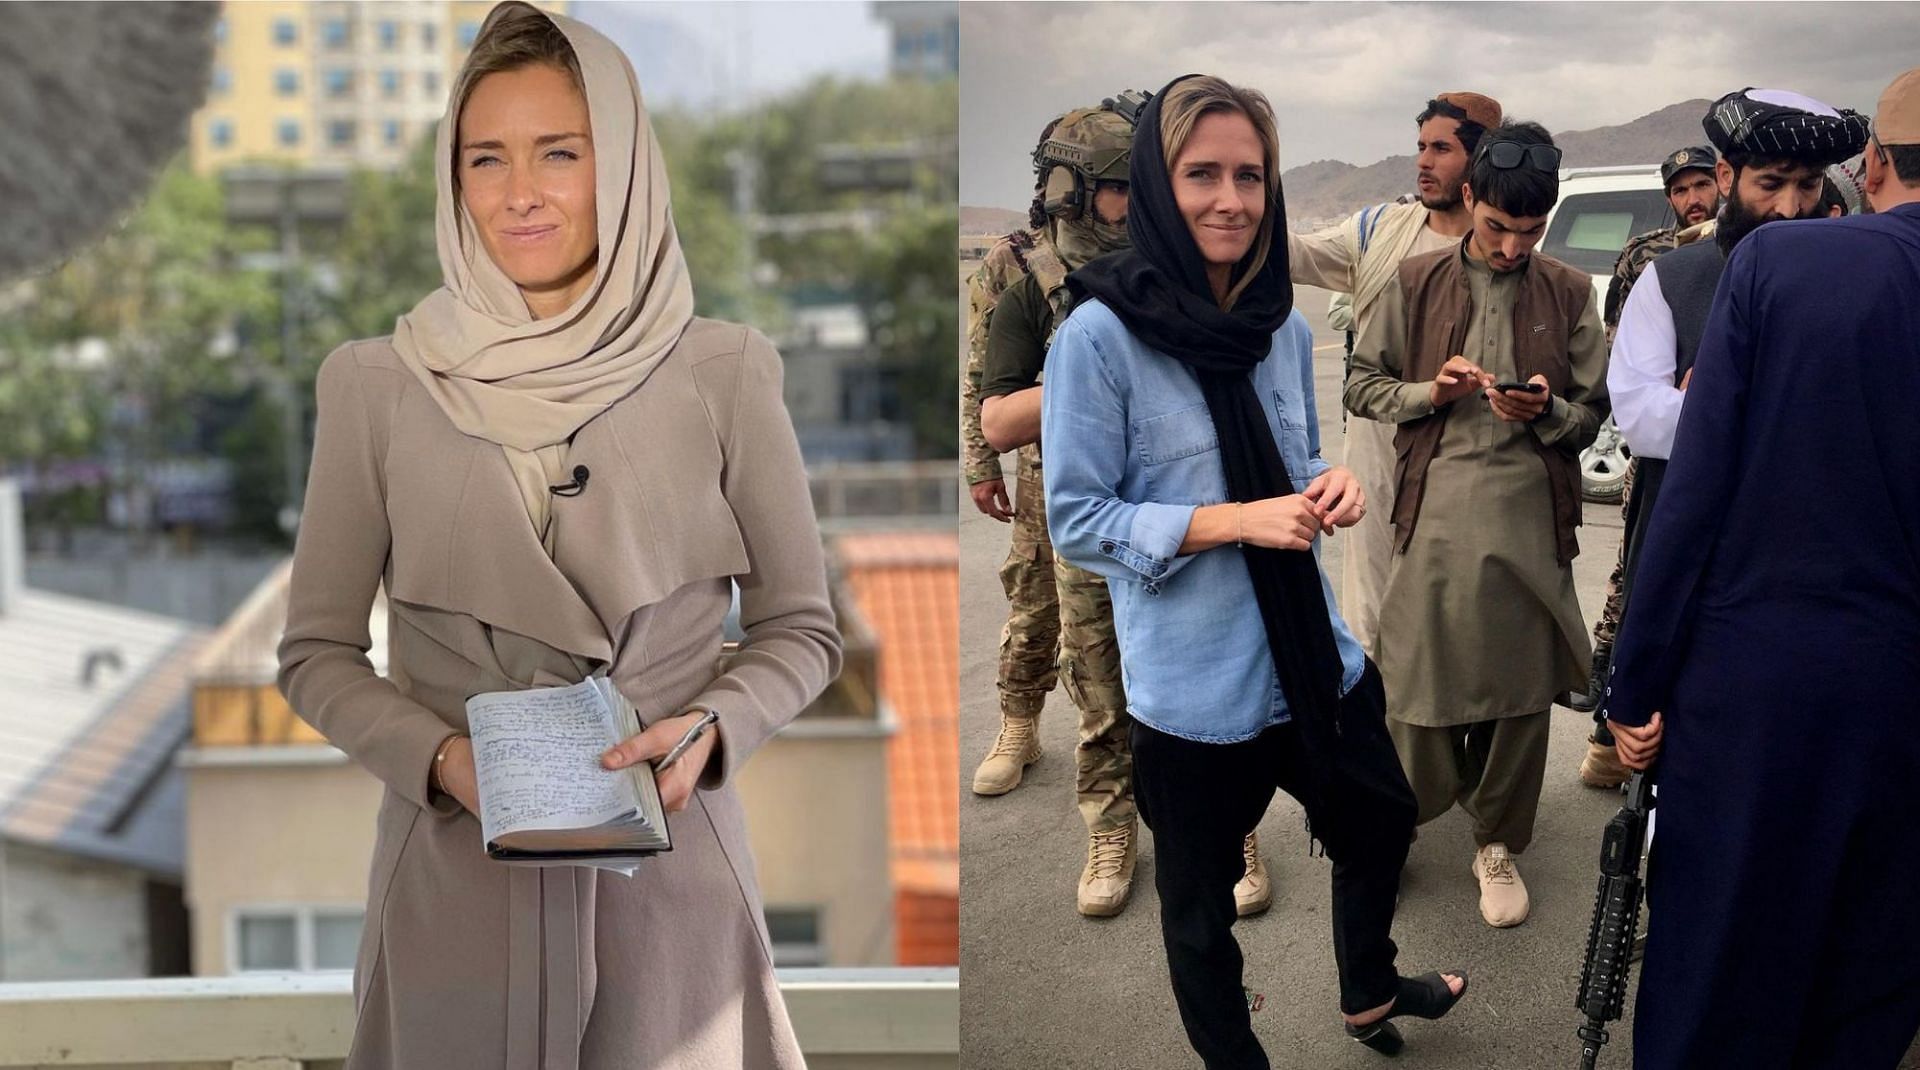 Pregnant journalist Charlotte Bellis took help from the Taliban (Image via Charlotte Bellis/Instagram)